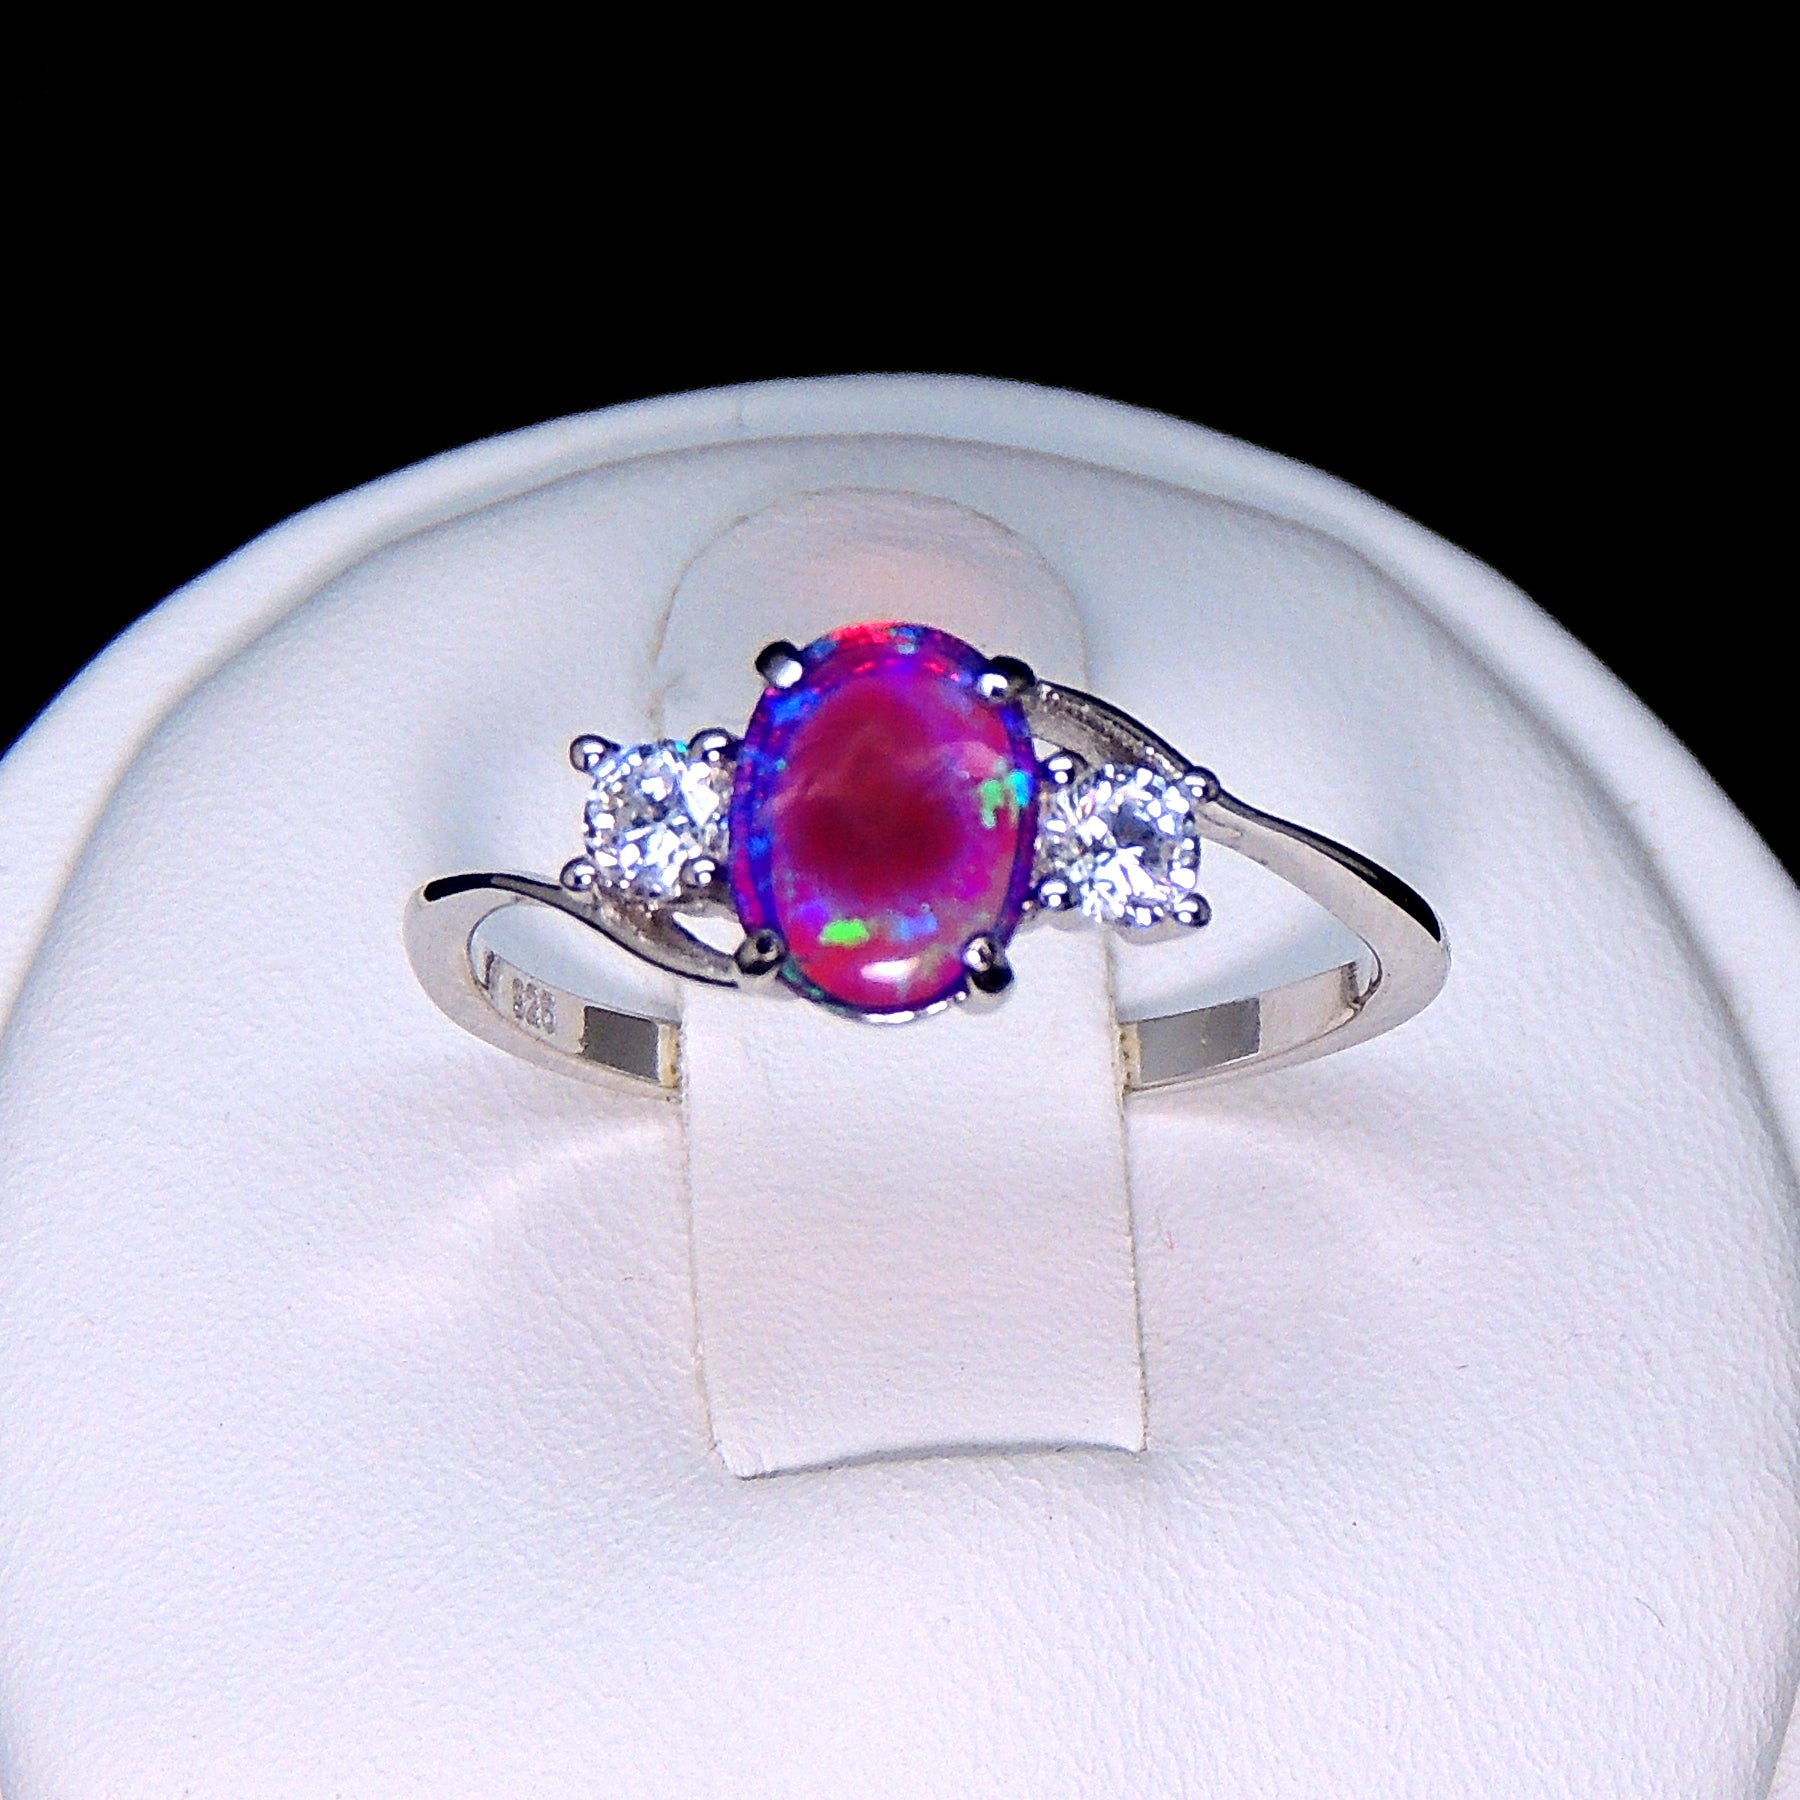 Addy Purple Opal Ring Sterling Silver Women Engagement Ginger Lyne - Purple,10